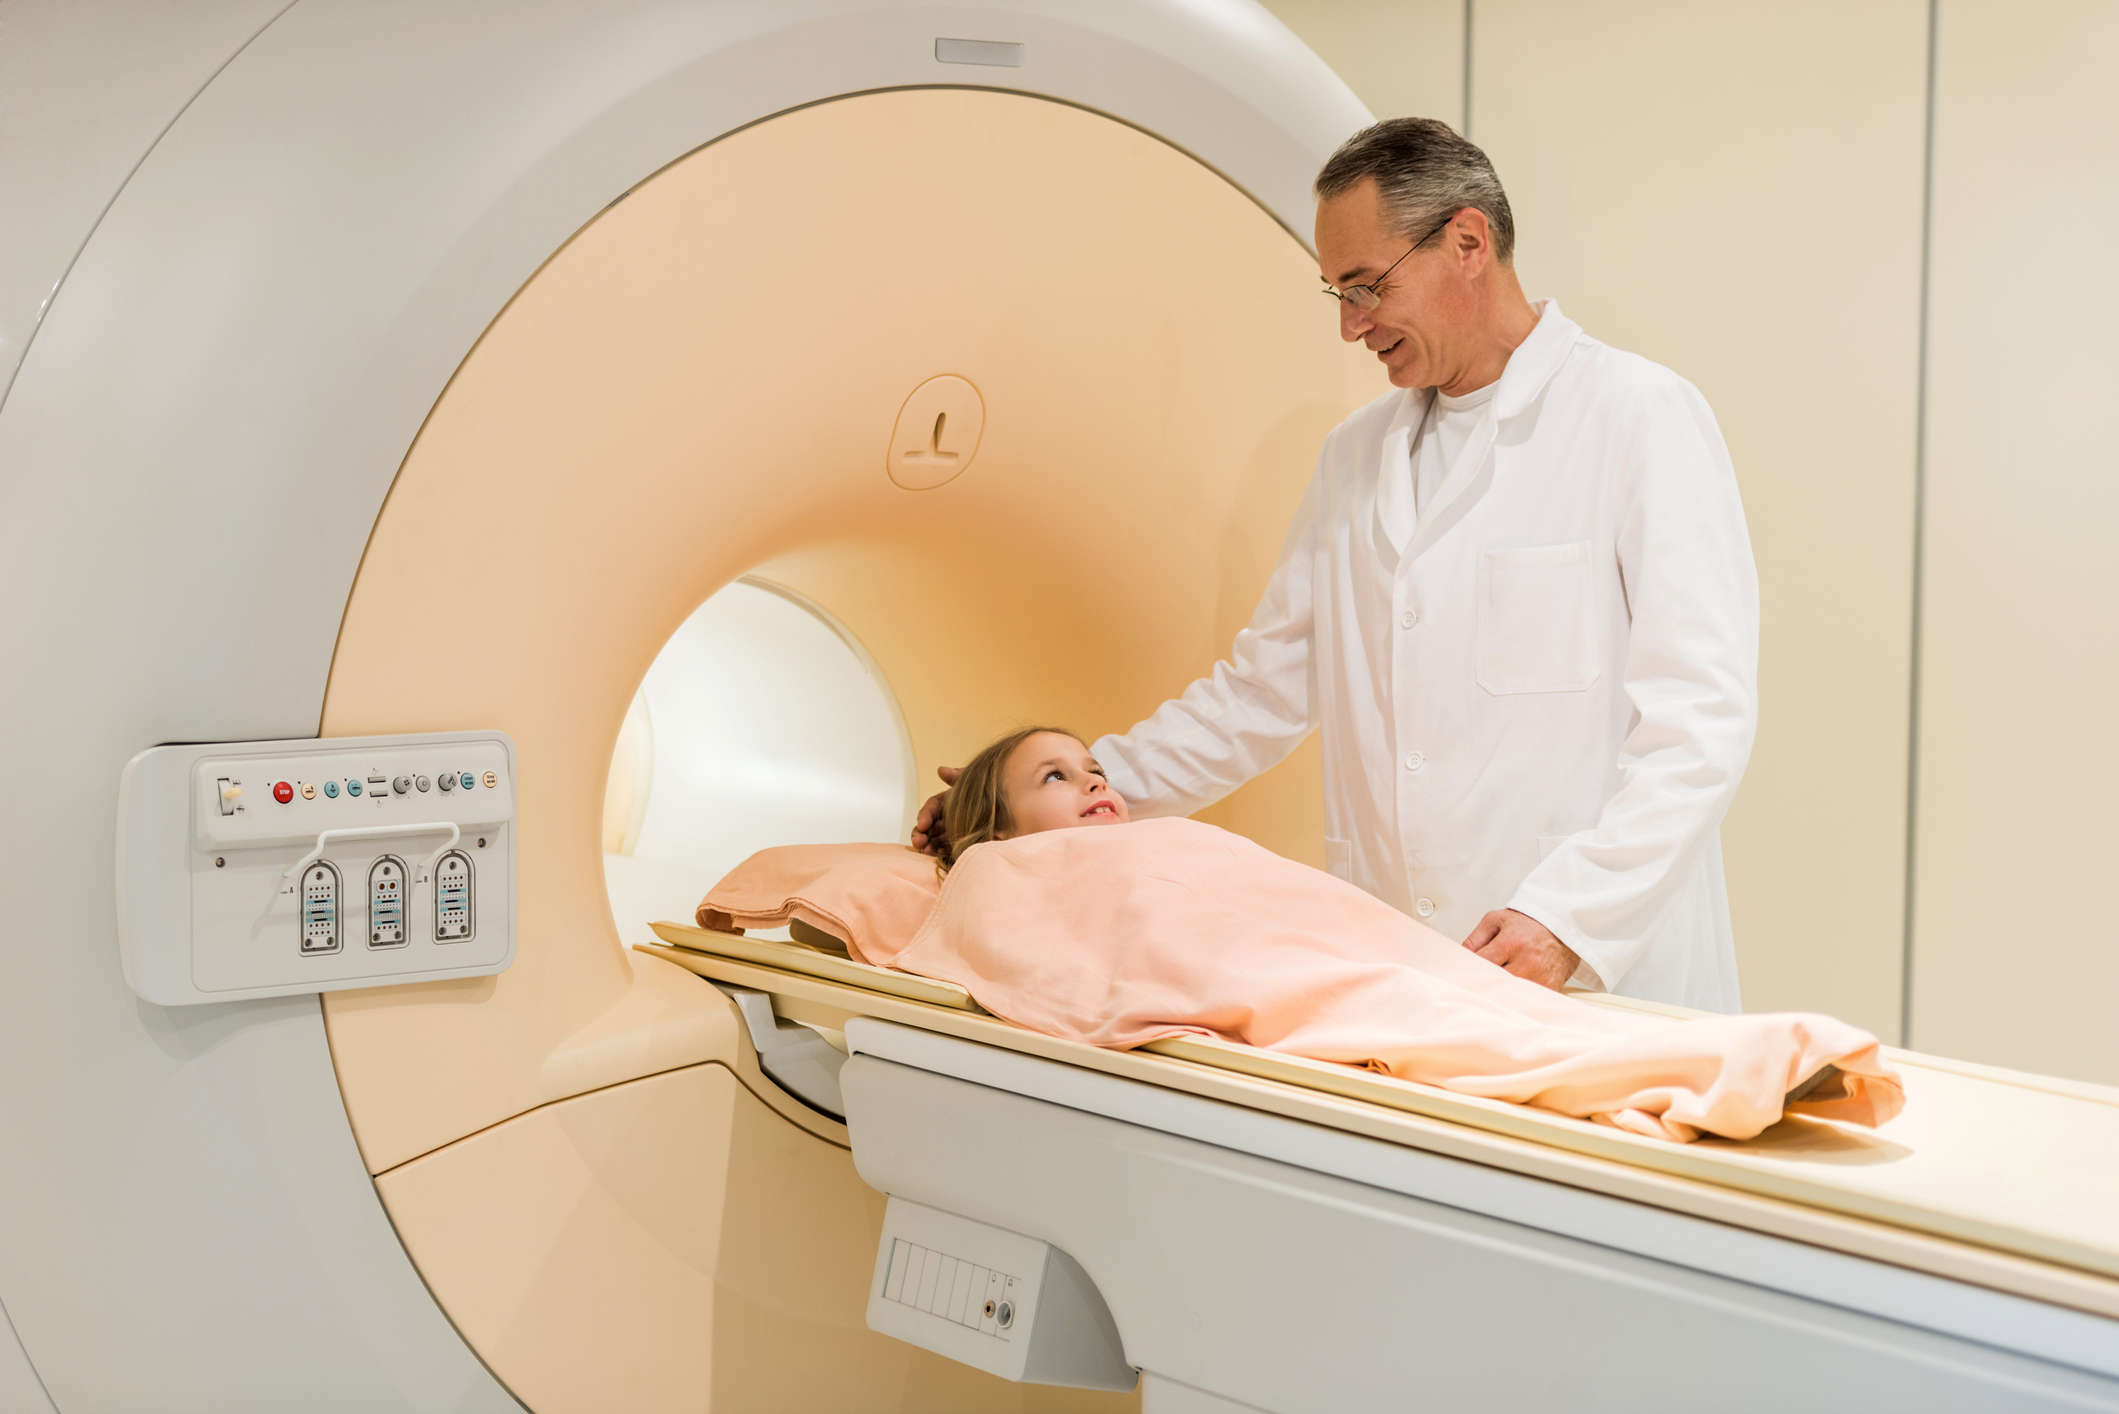 A child getting an MRI